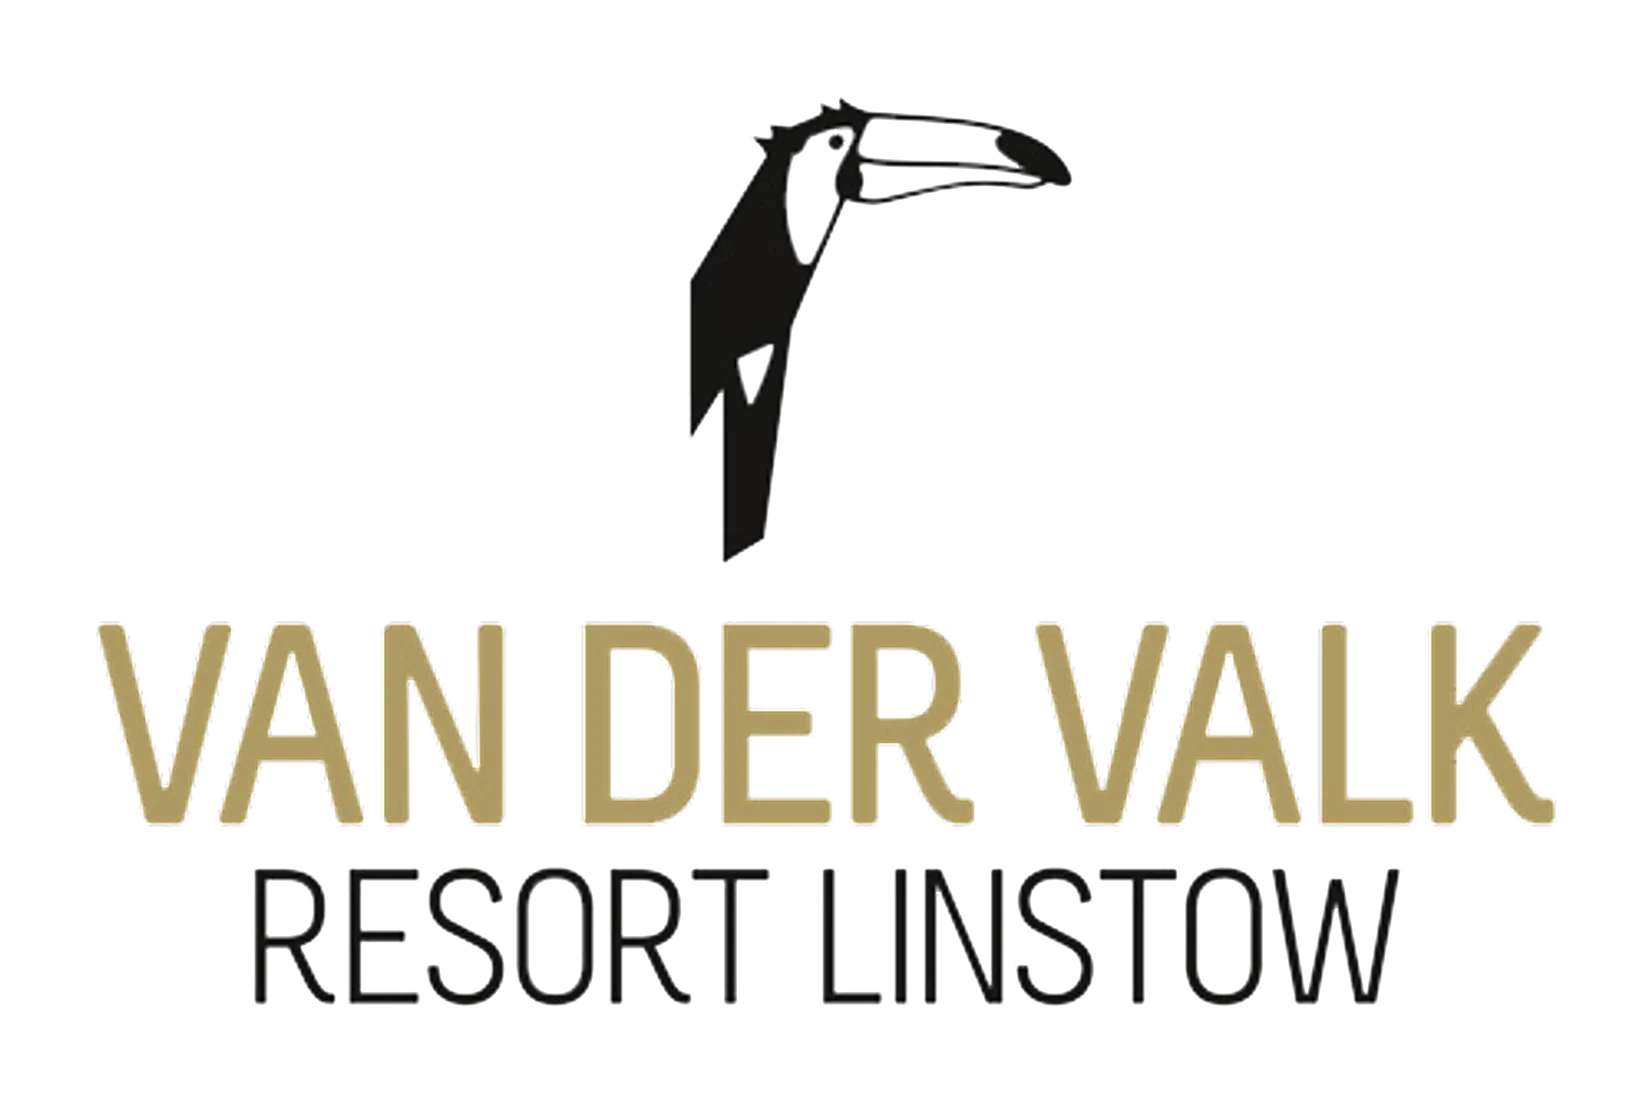 Logo Van der Valk Resort